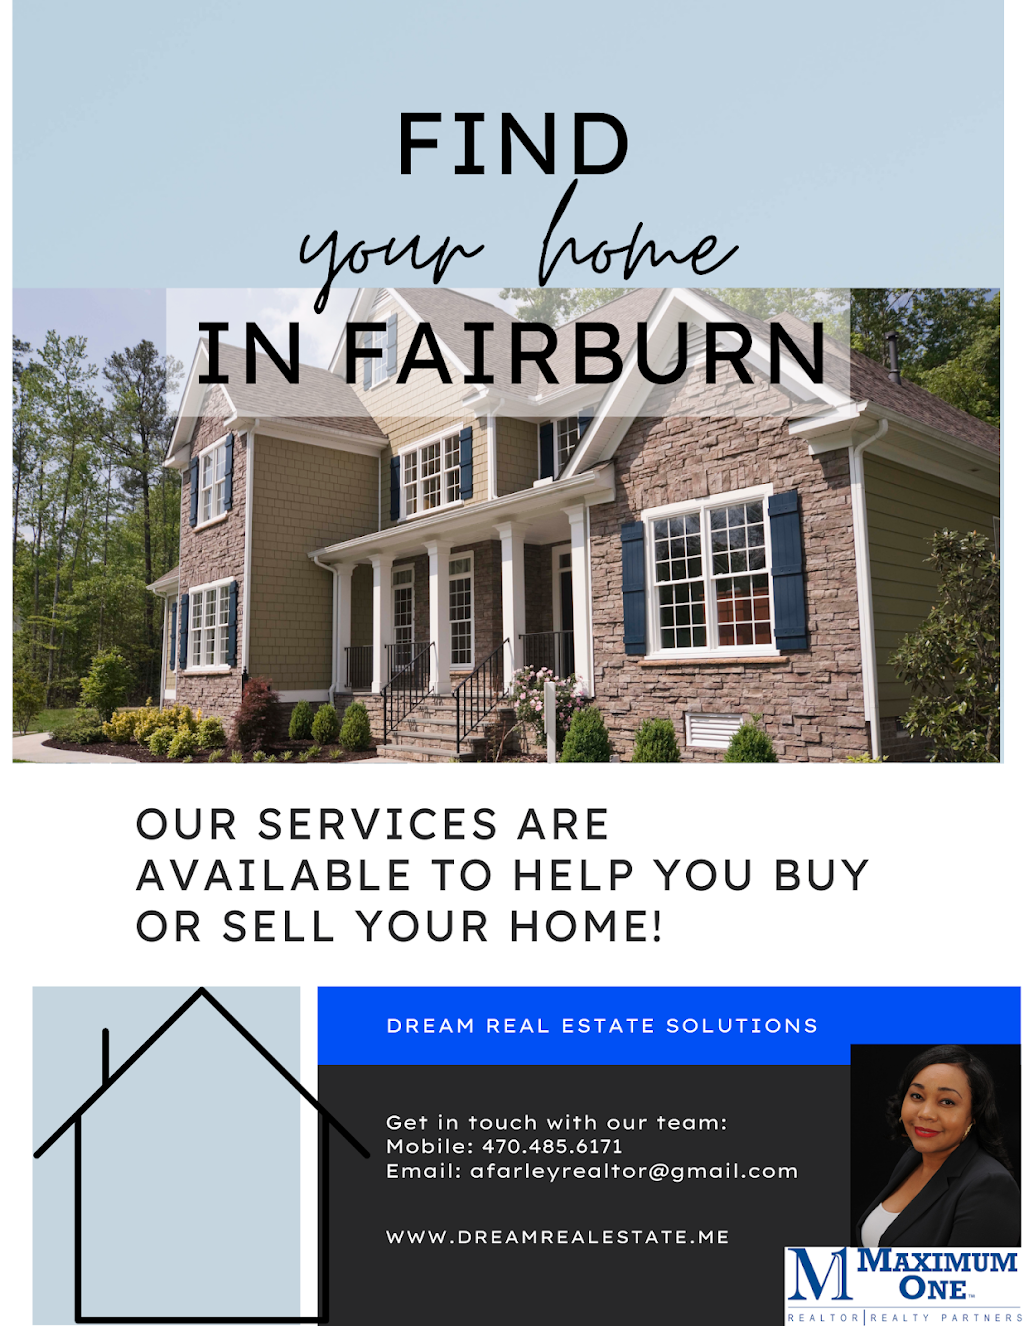 Andrea Farley with Dream Real Estate Solutions | 1590 Phoenix Blvd Ste 150, Atlanta, GA 30349, USA | Phone: (404) 965-5041